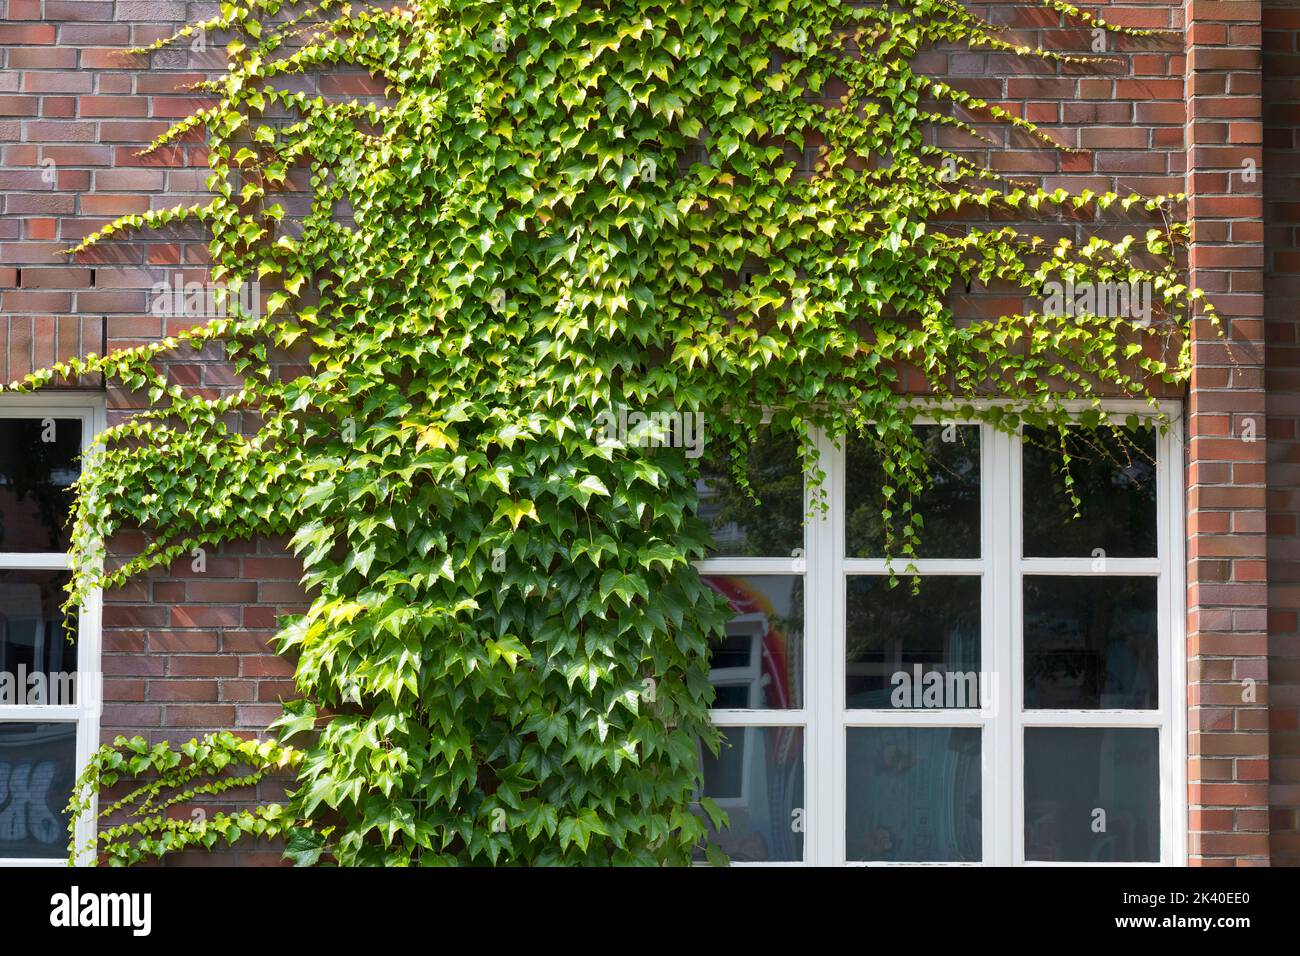 Boston ivy, Japanese creeper (Parthenocissus tricuspidata), climbing at a facade, Germany Stock Photo